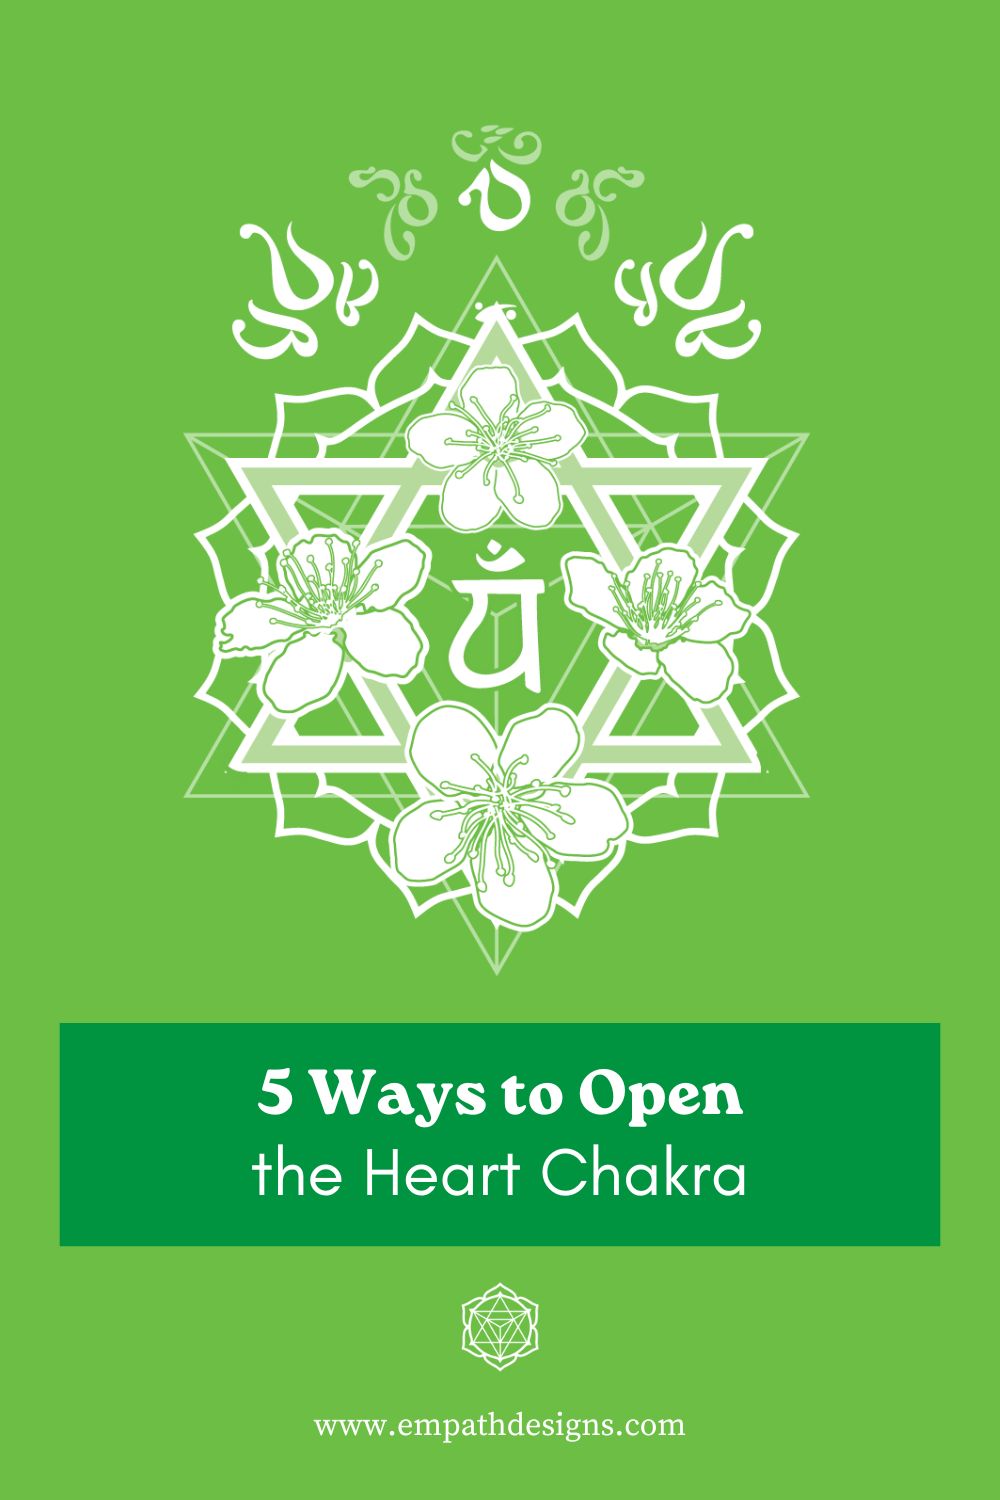 Embracing Love Through the Heart Chakra